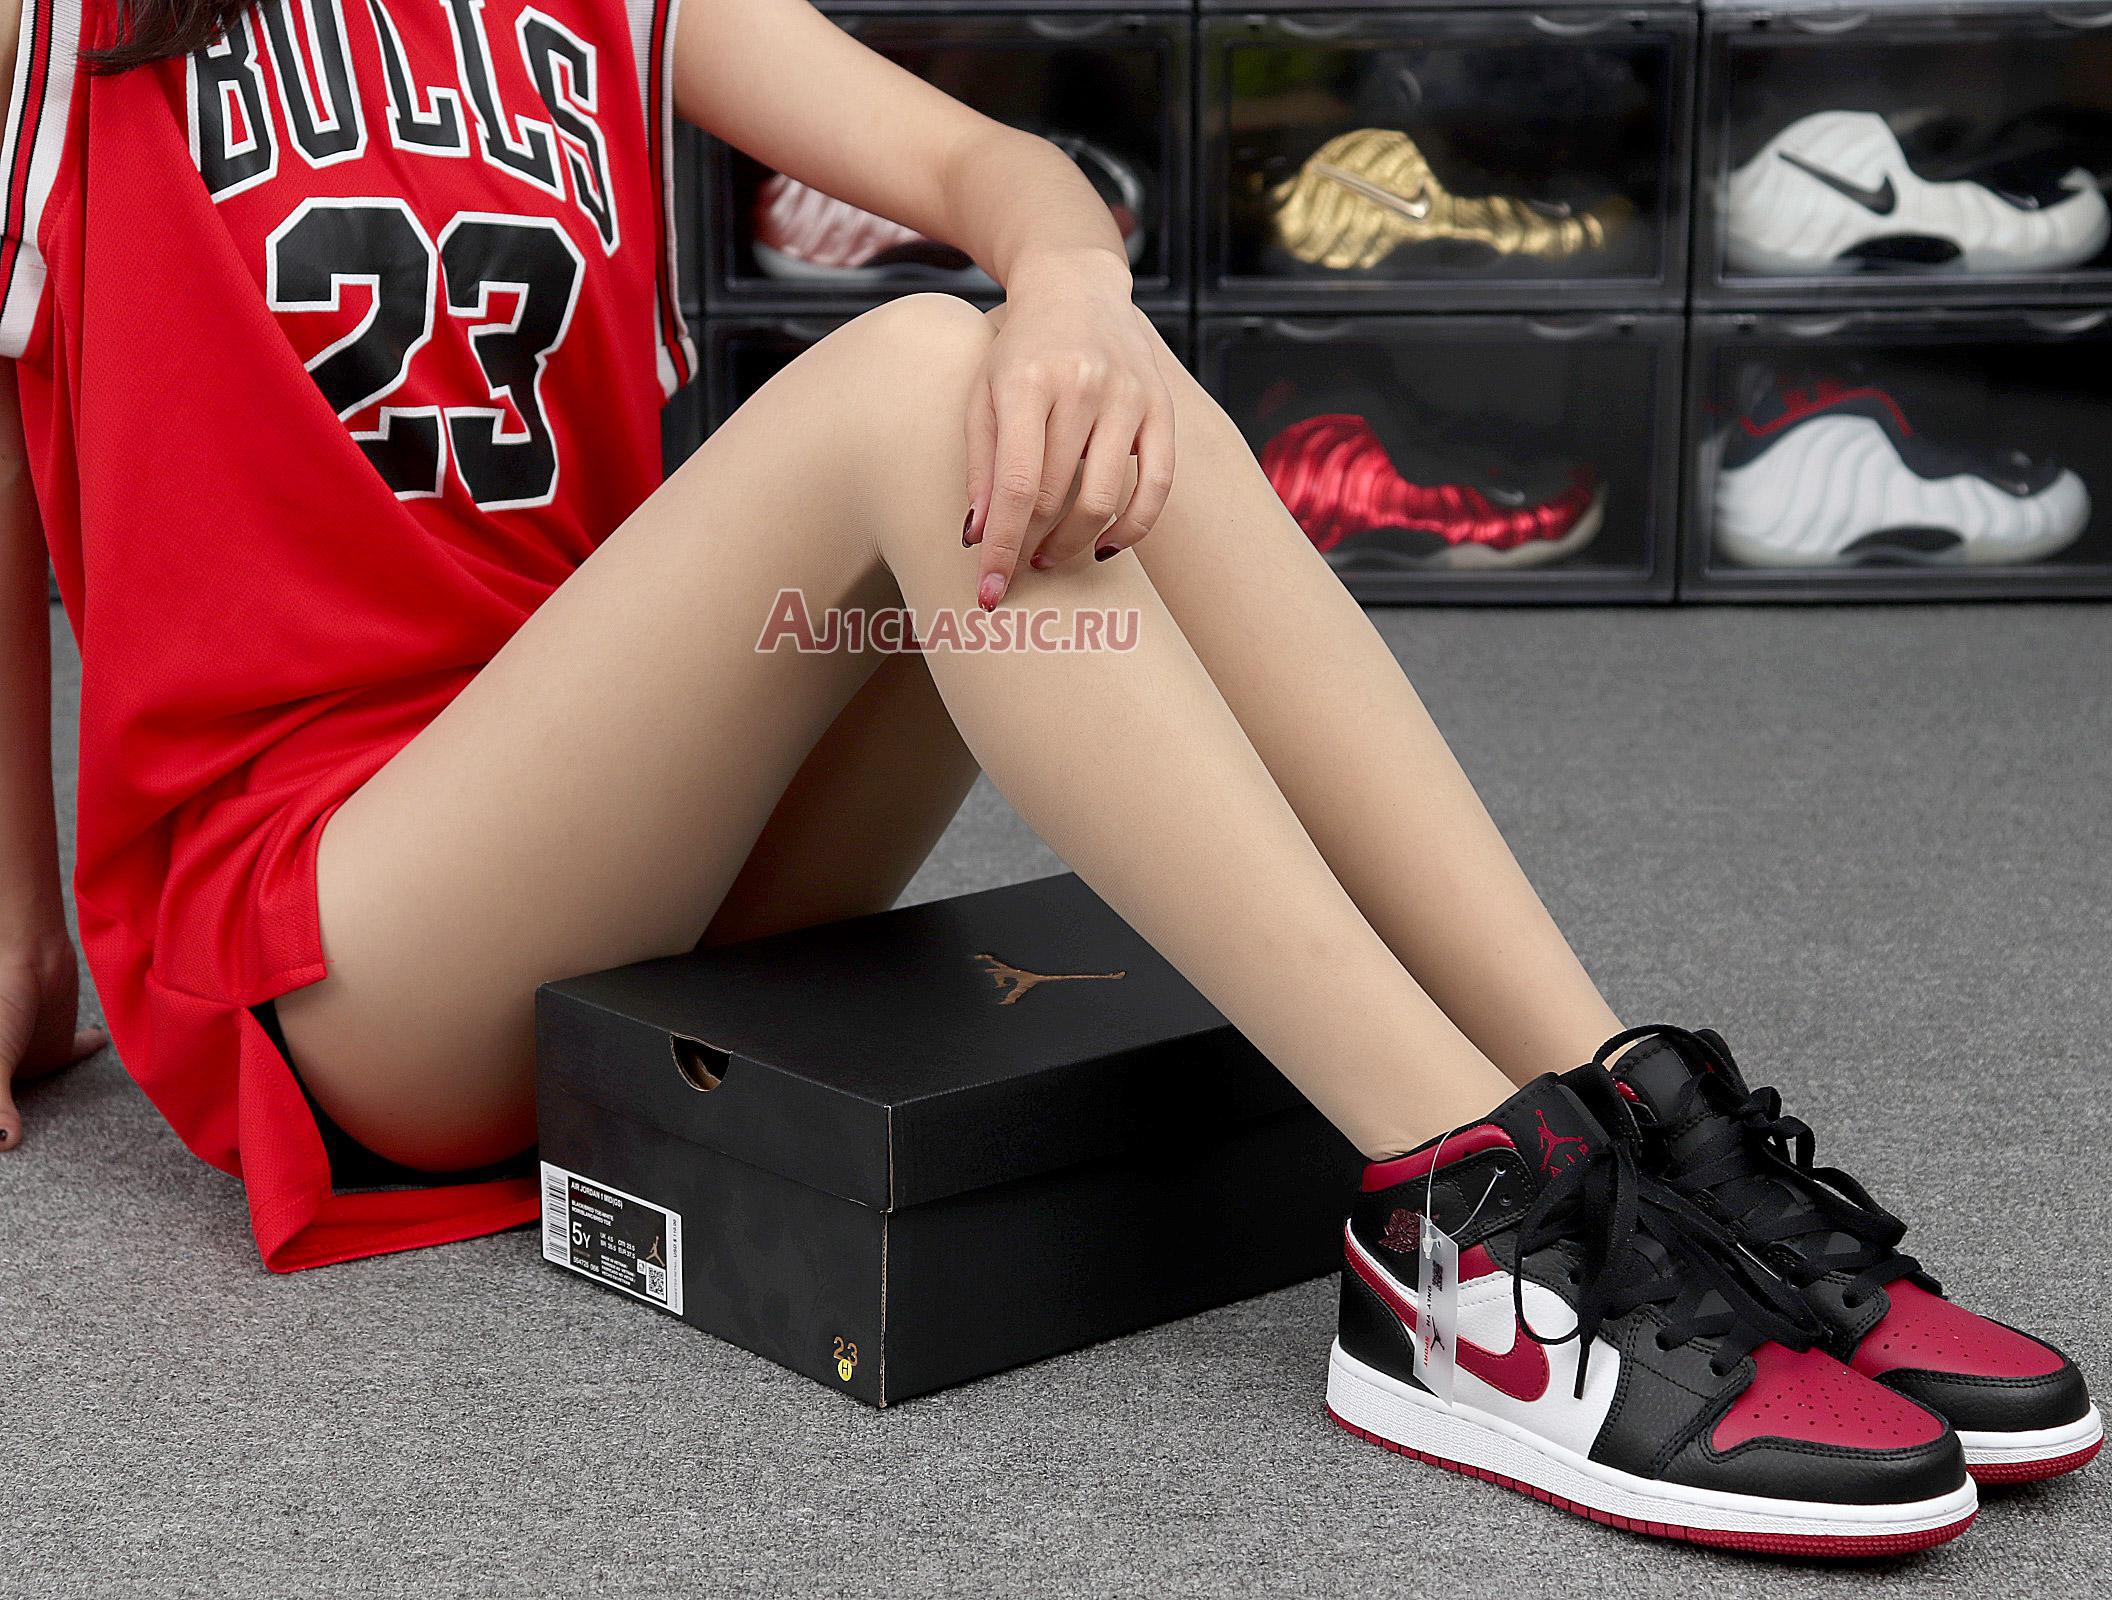 Air Jordan 1 Mid Noble Red 554725-066 Black/Noble Red/White Sneakers